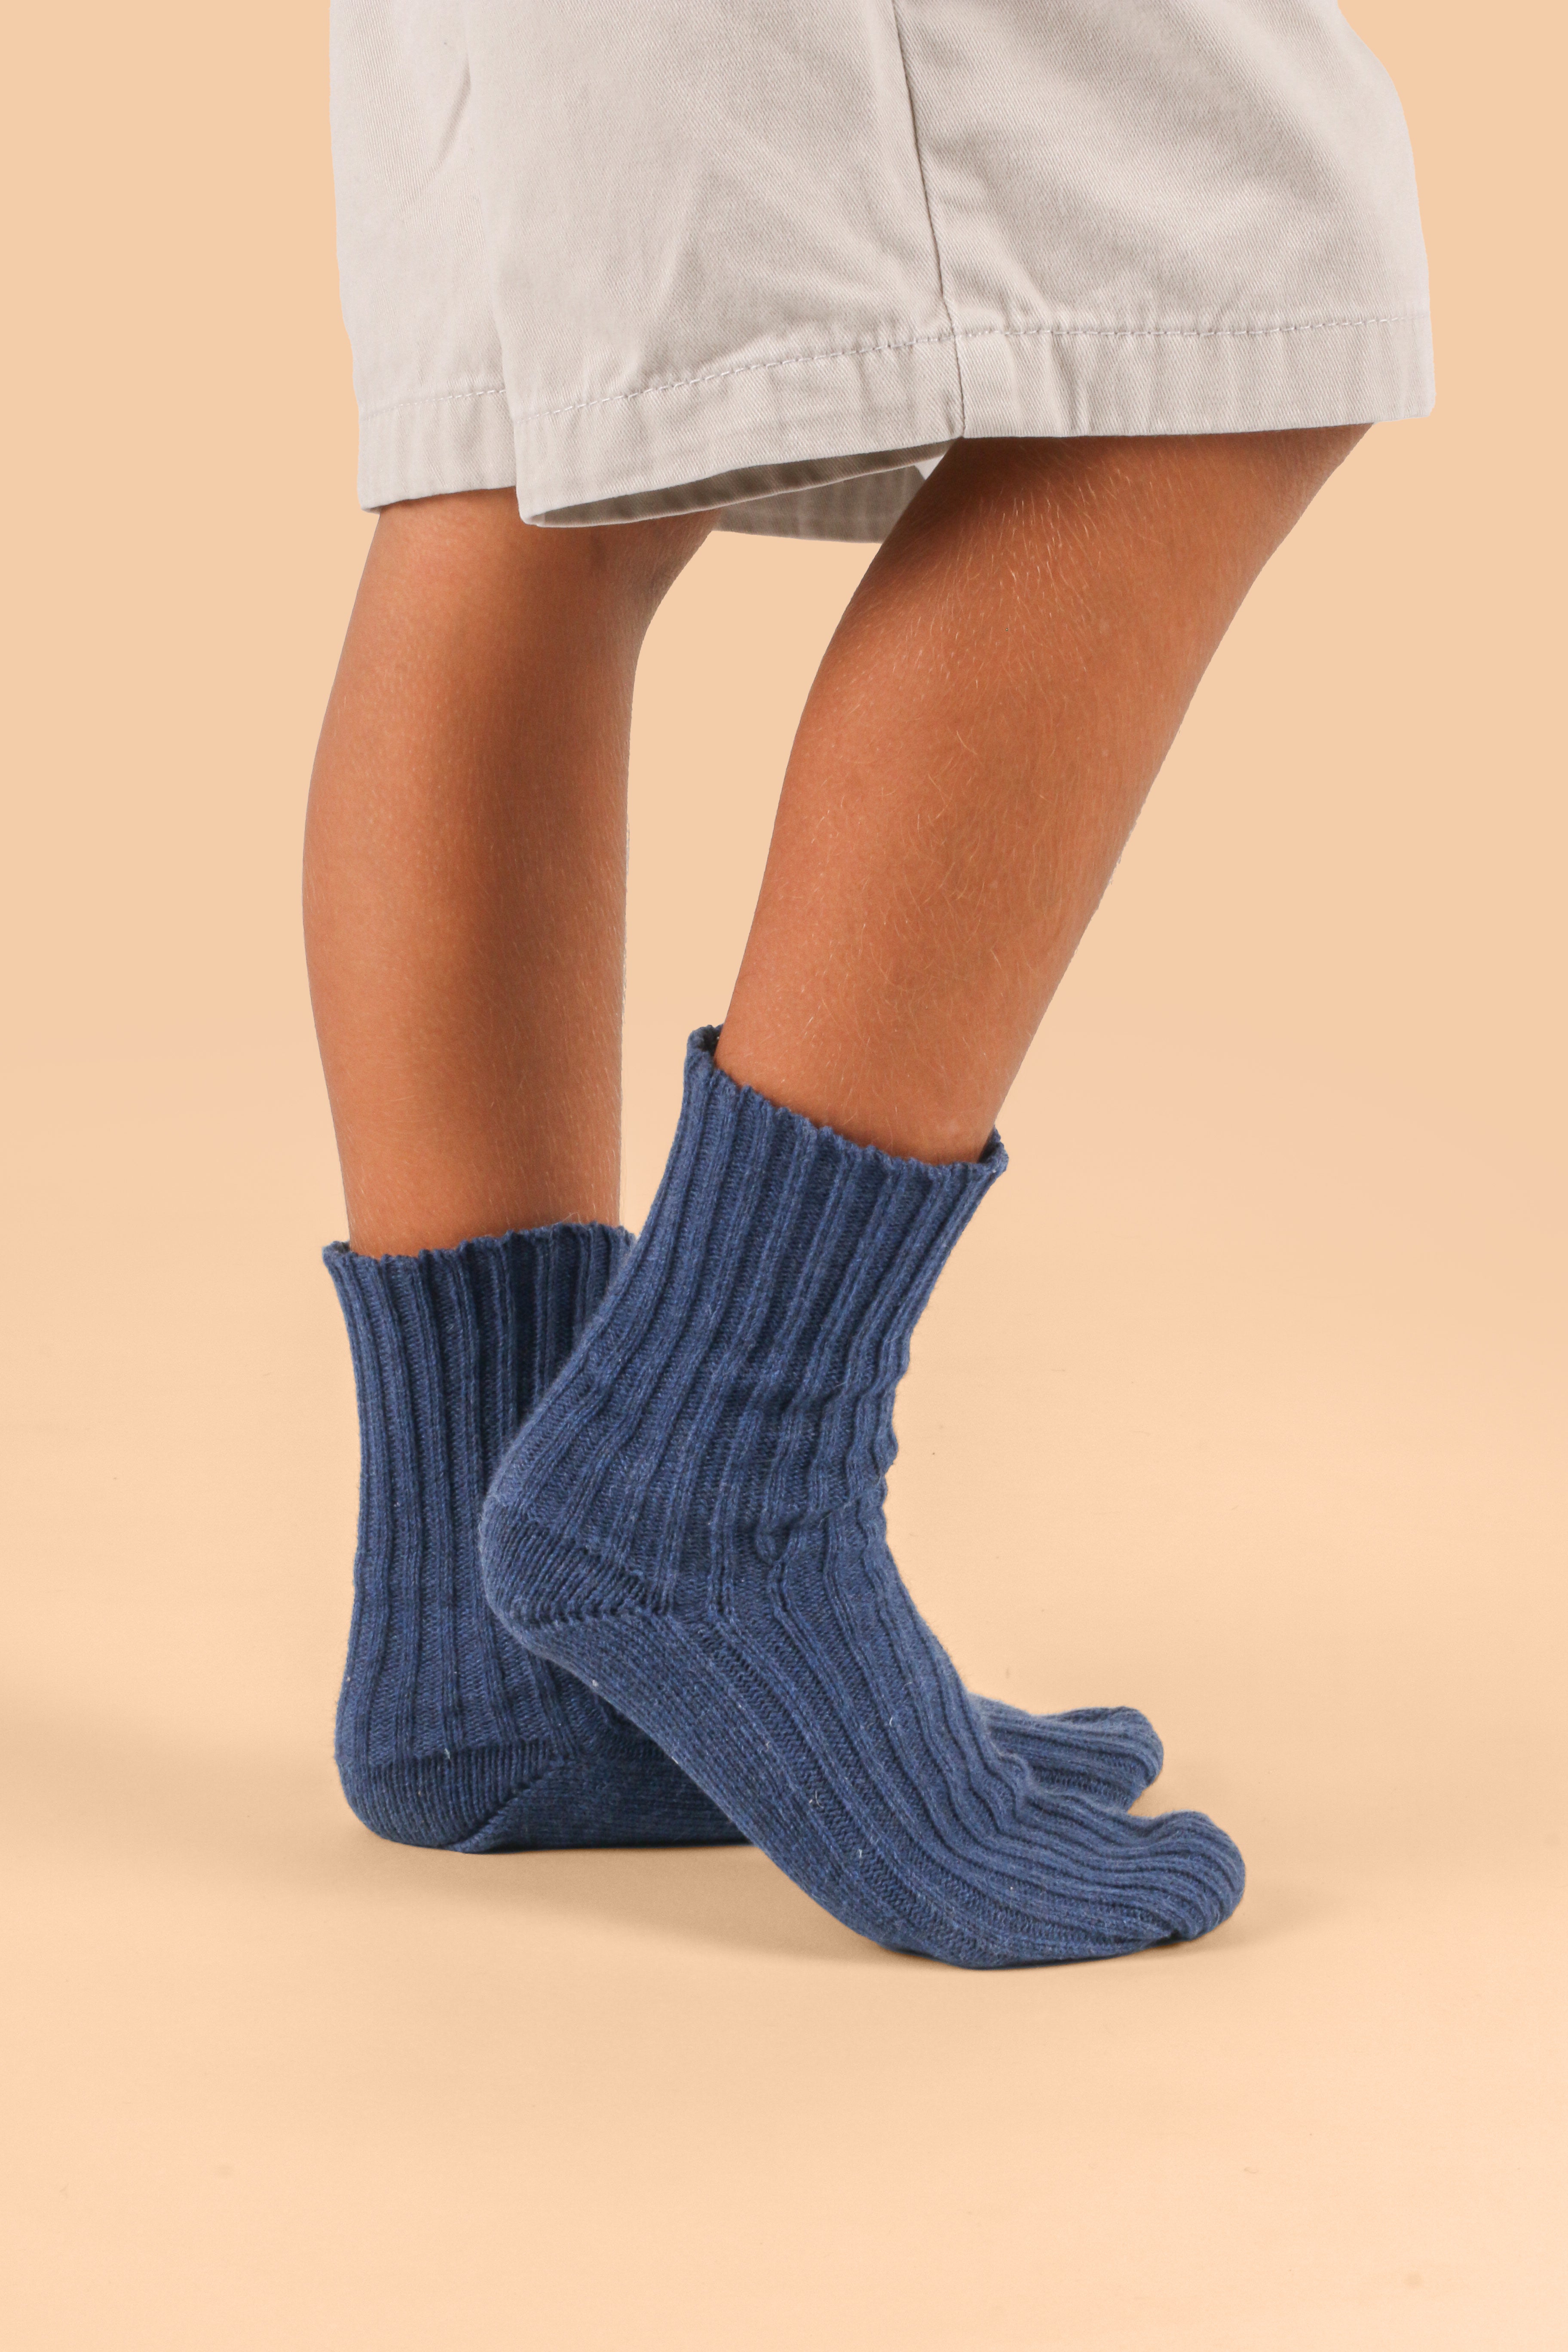 Cottonique Childrens Girls Plain Lace Top Socks (Pack Of 3) (K333